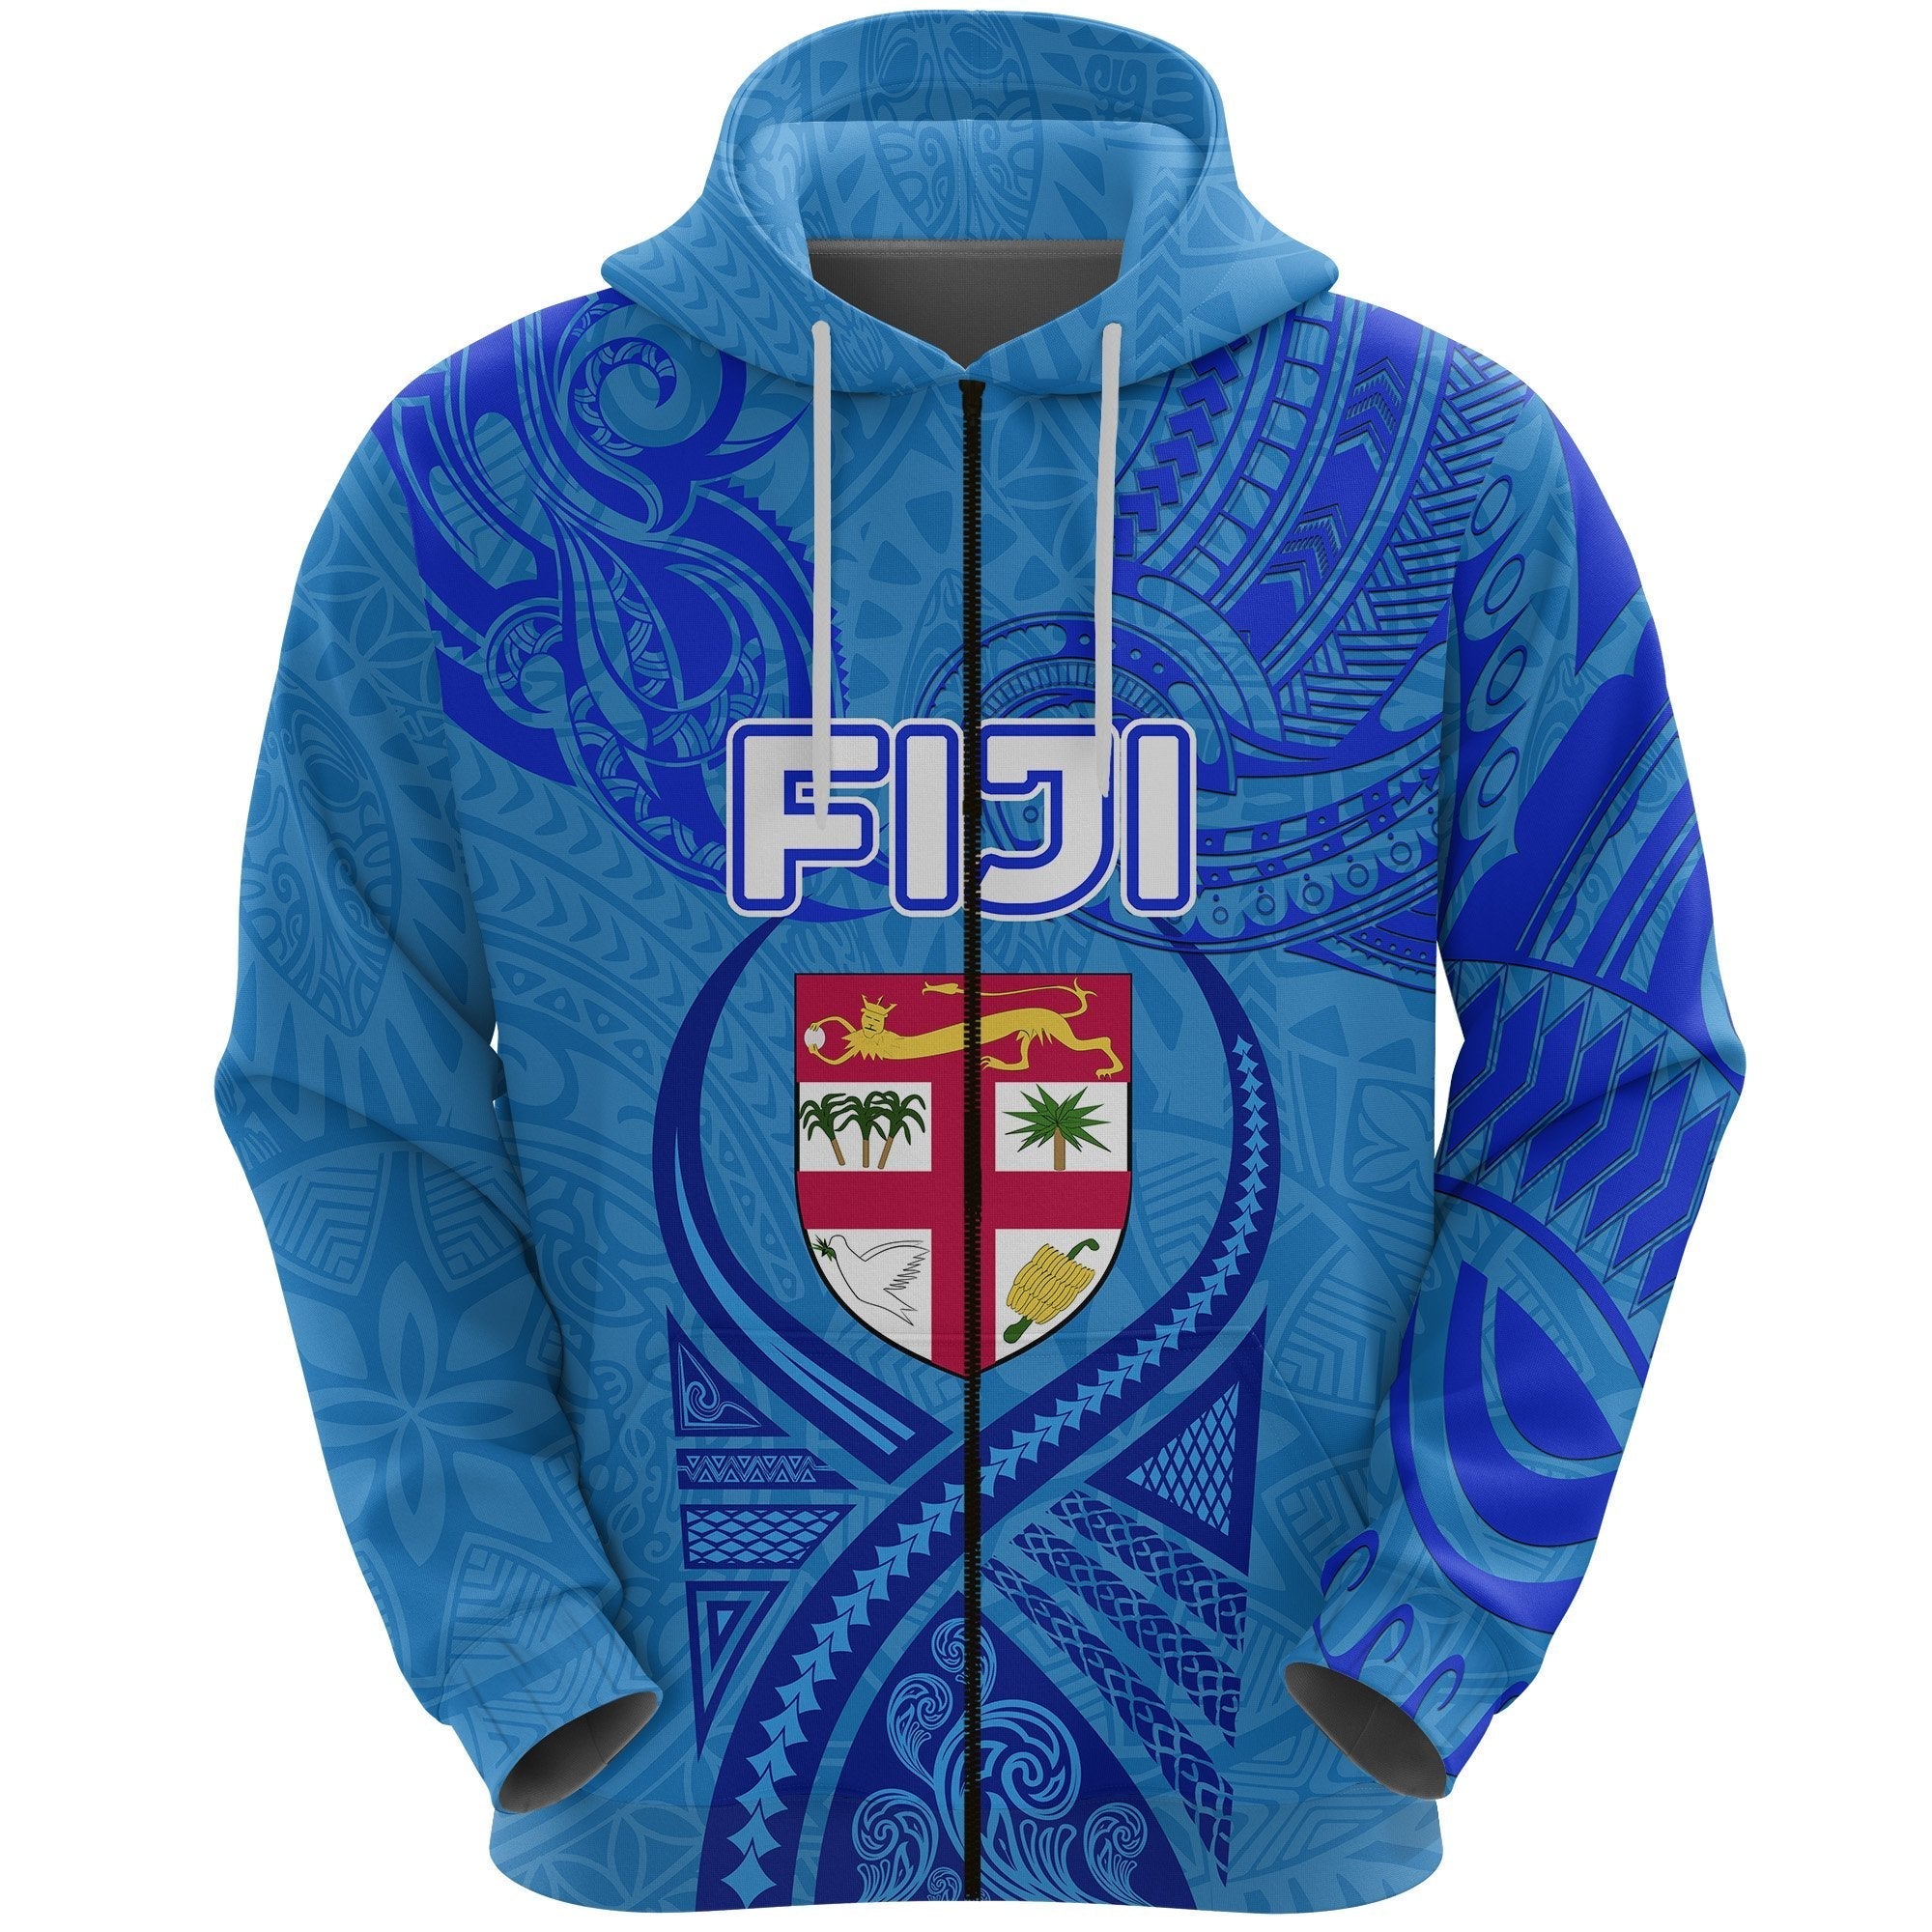 custom-personalised-blue-zip-hoodie-fiji-rugby-polynesian-waves-style-custom-text-and-number